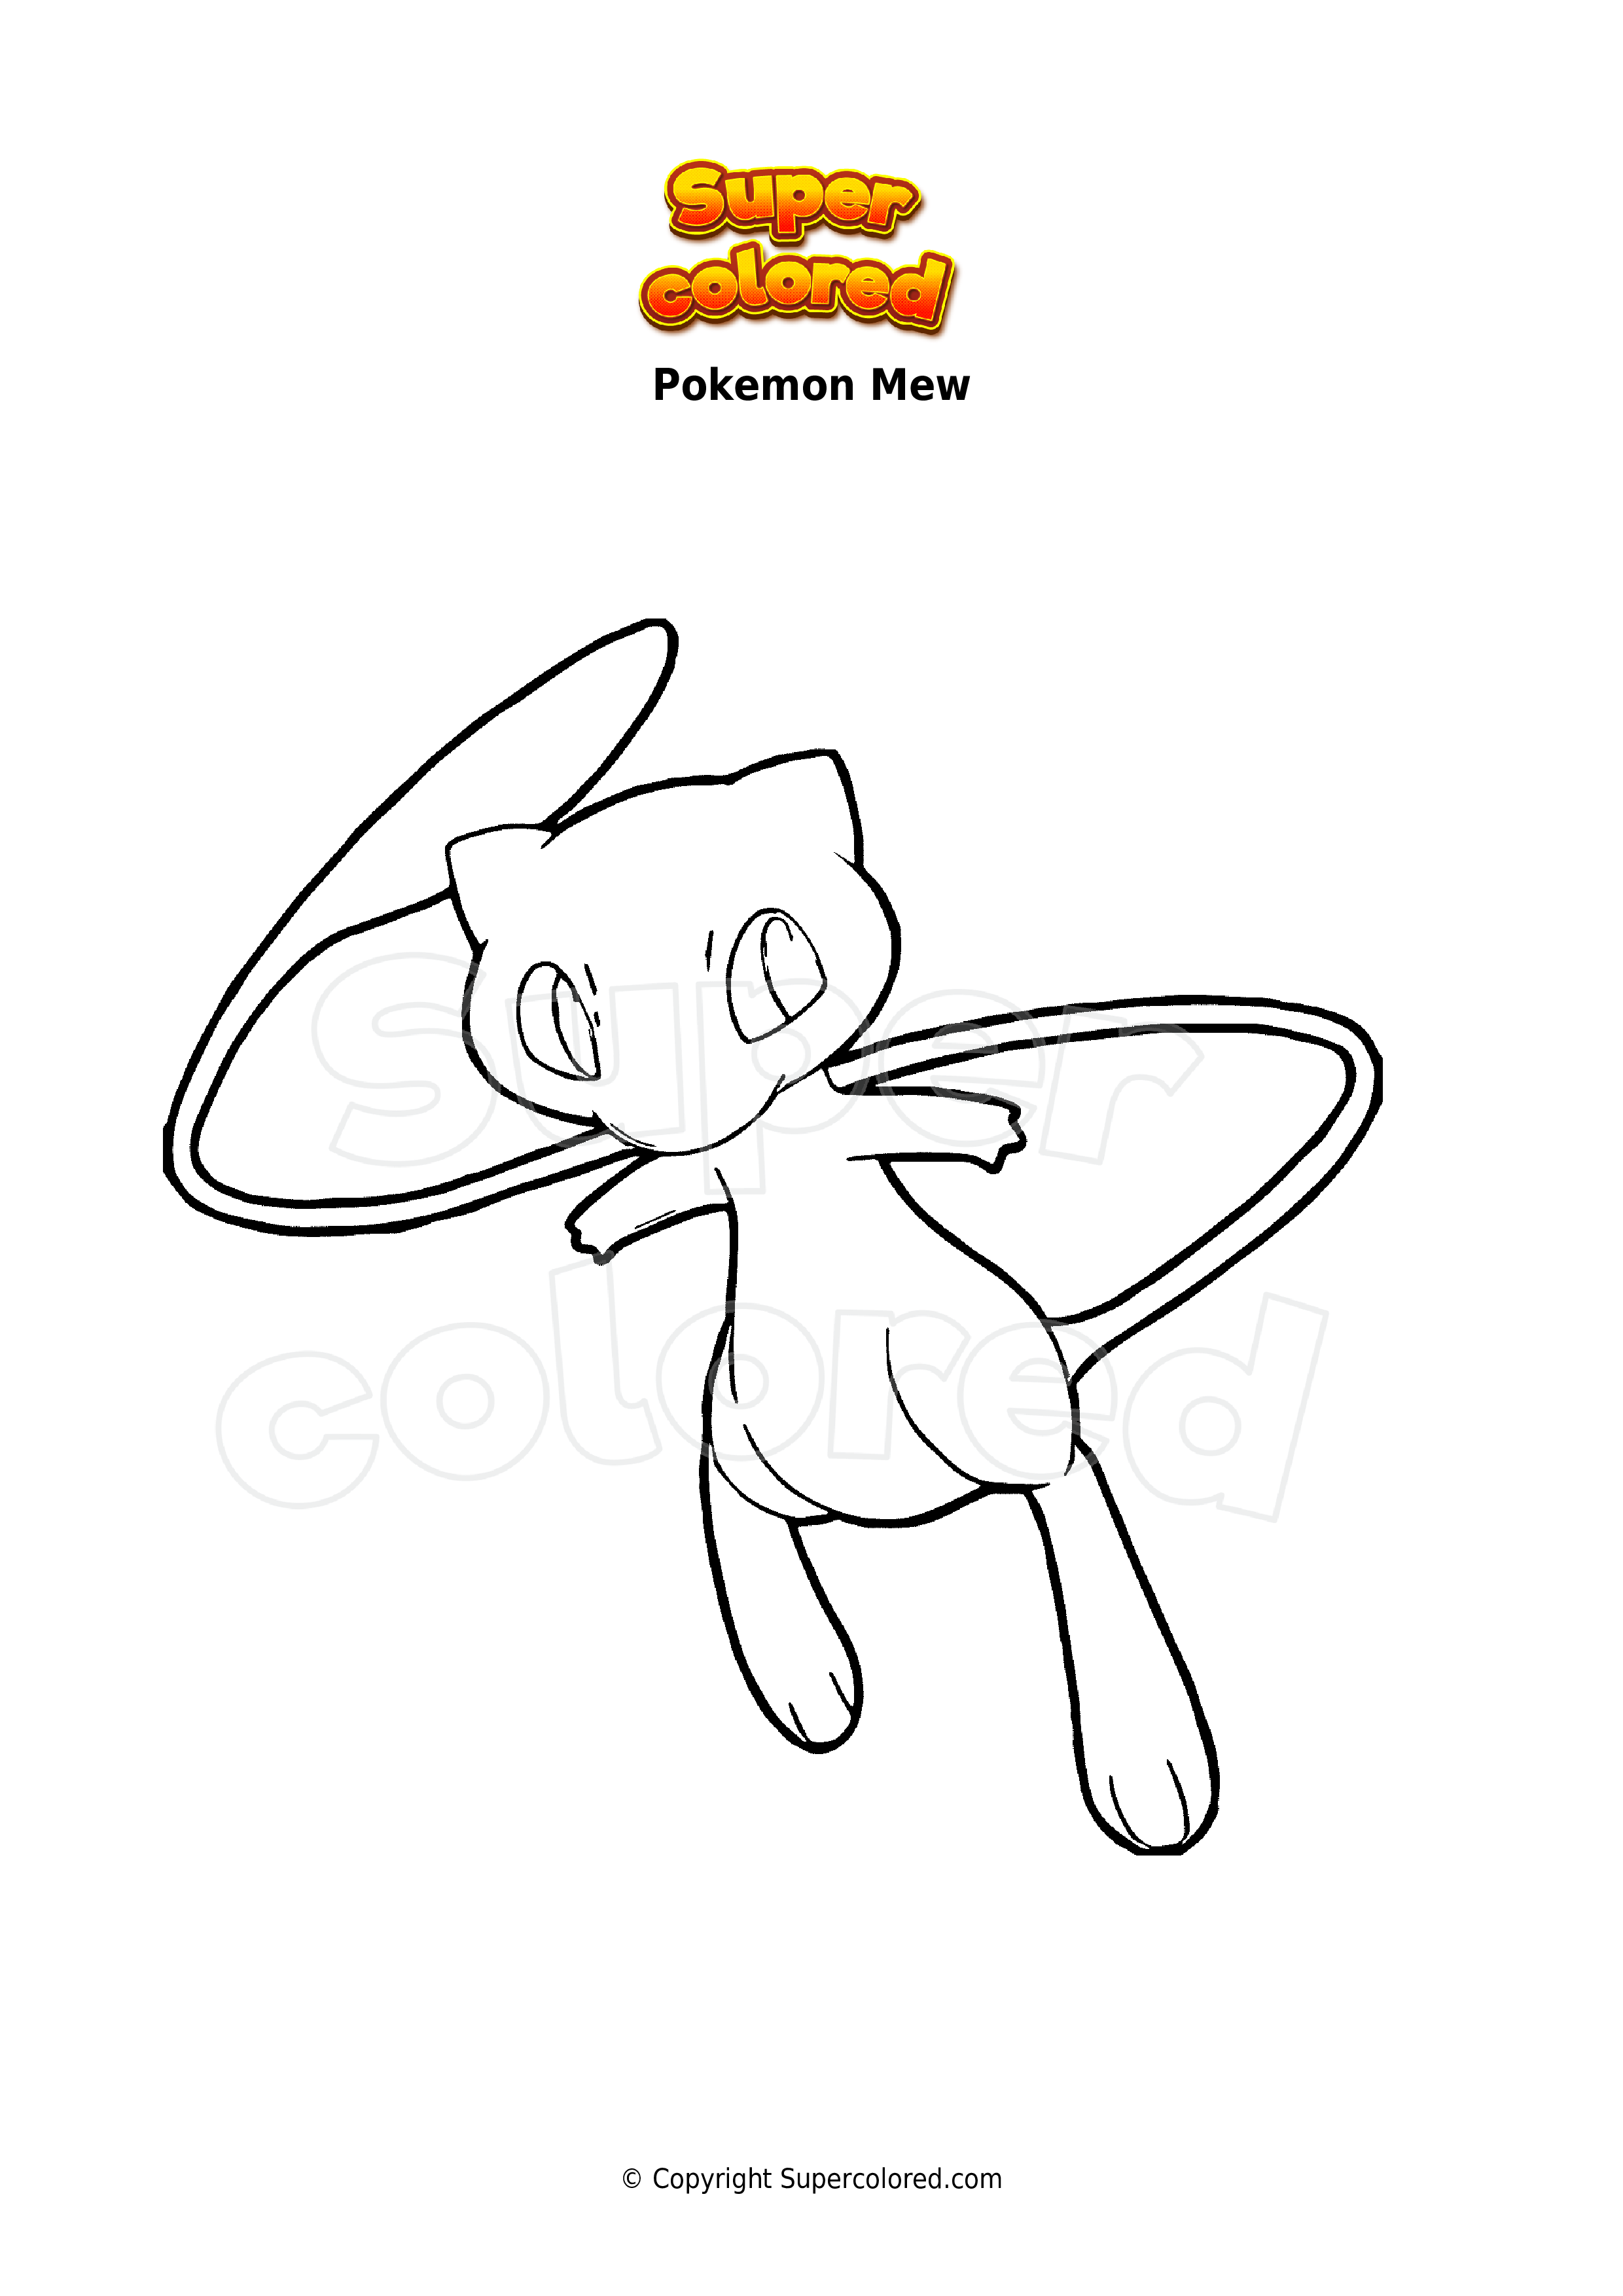 Pokemon Mew, Super Coloring